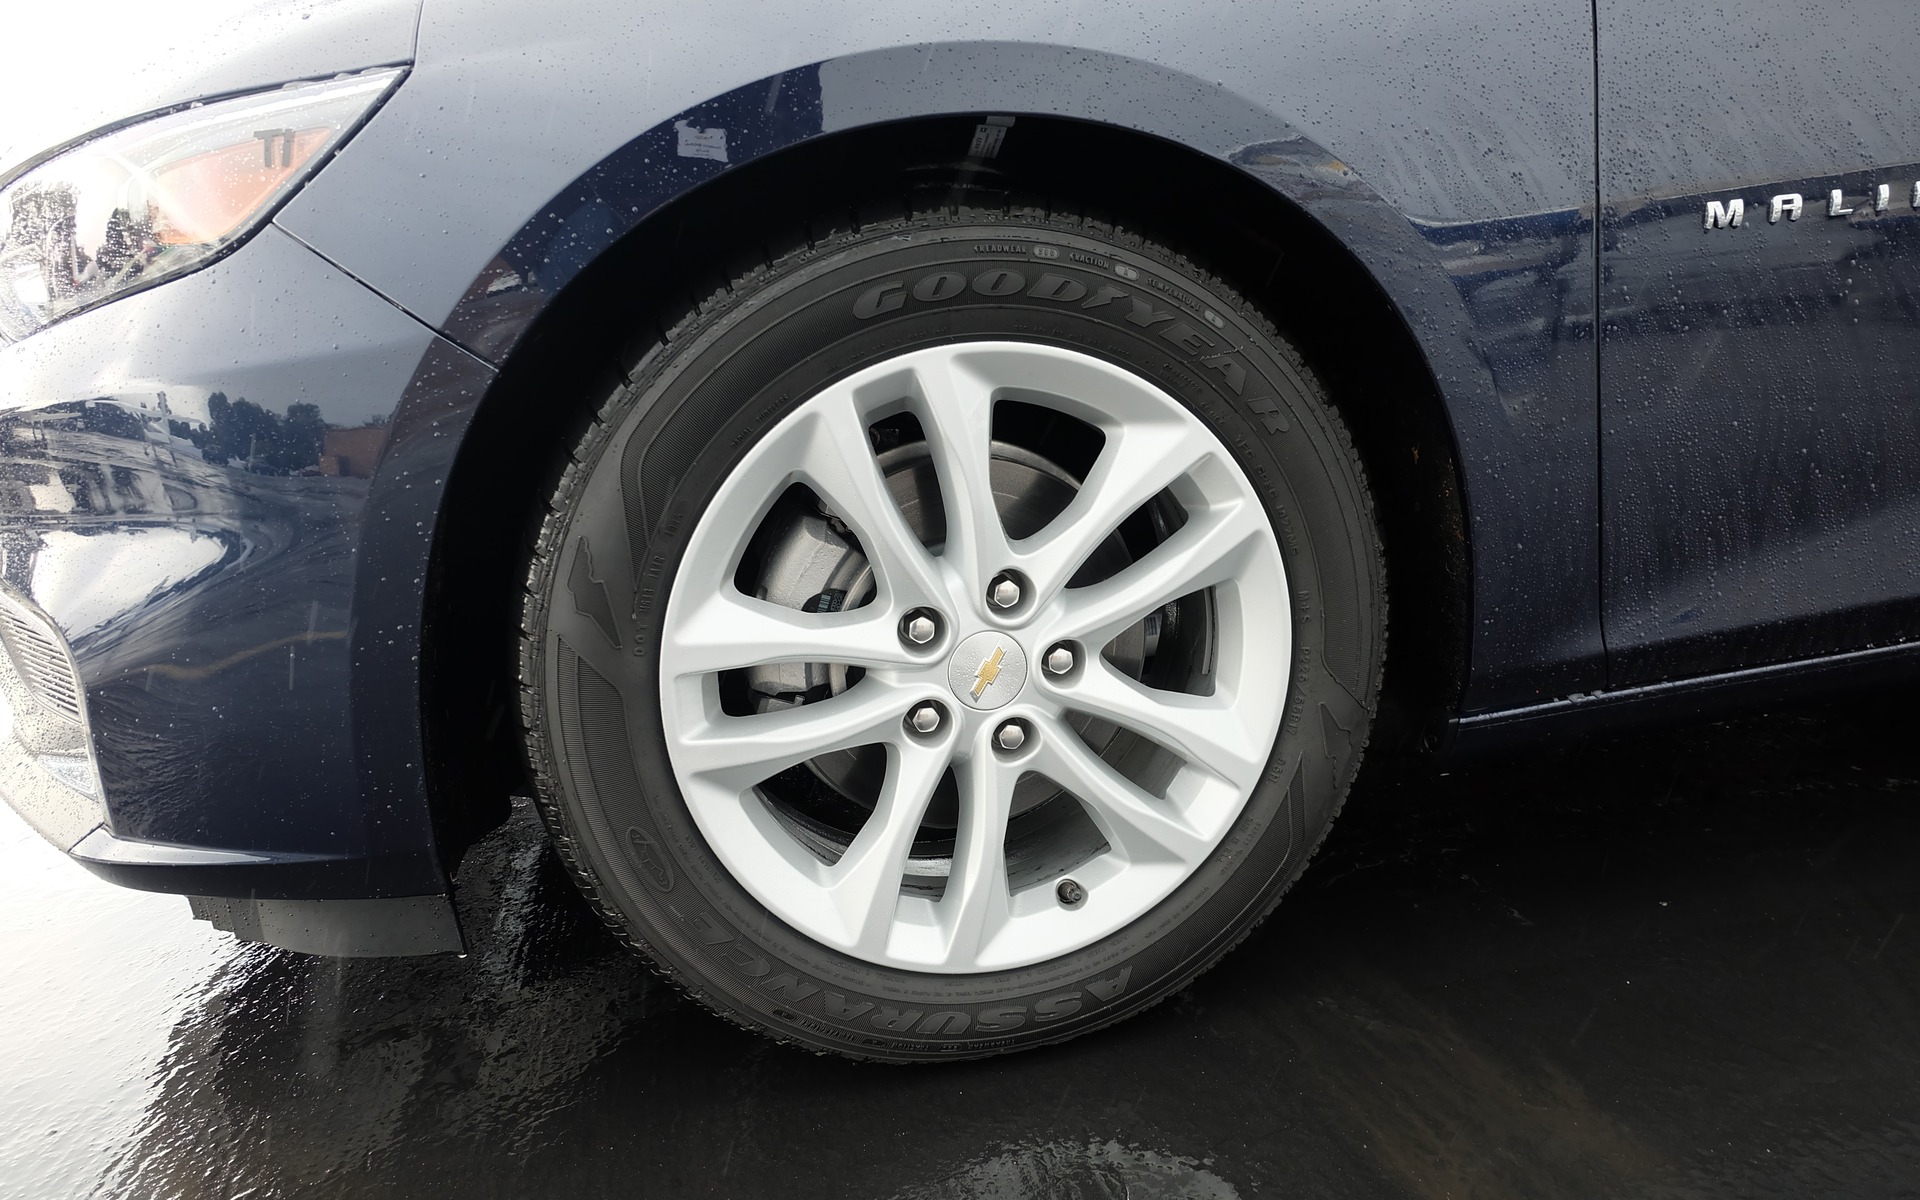 The Premier trim level gets standard 18-inch wheels